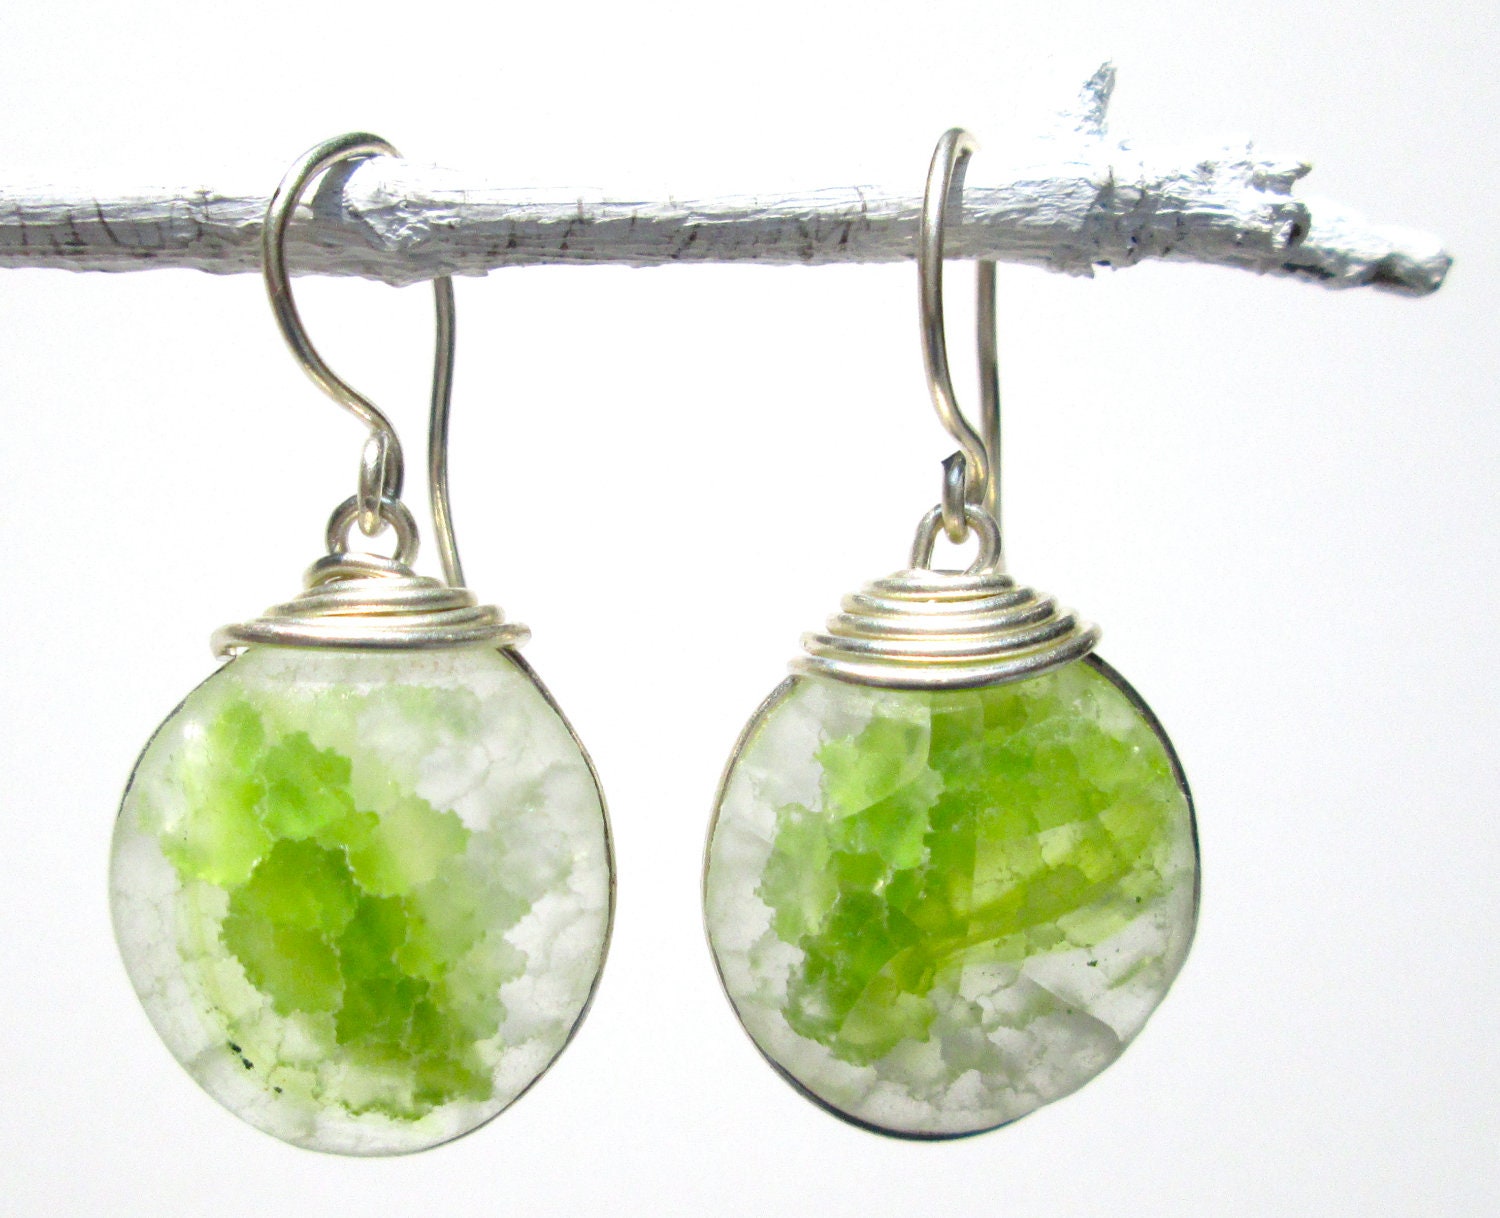 Swirl charm, Green Stained Glass earrings